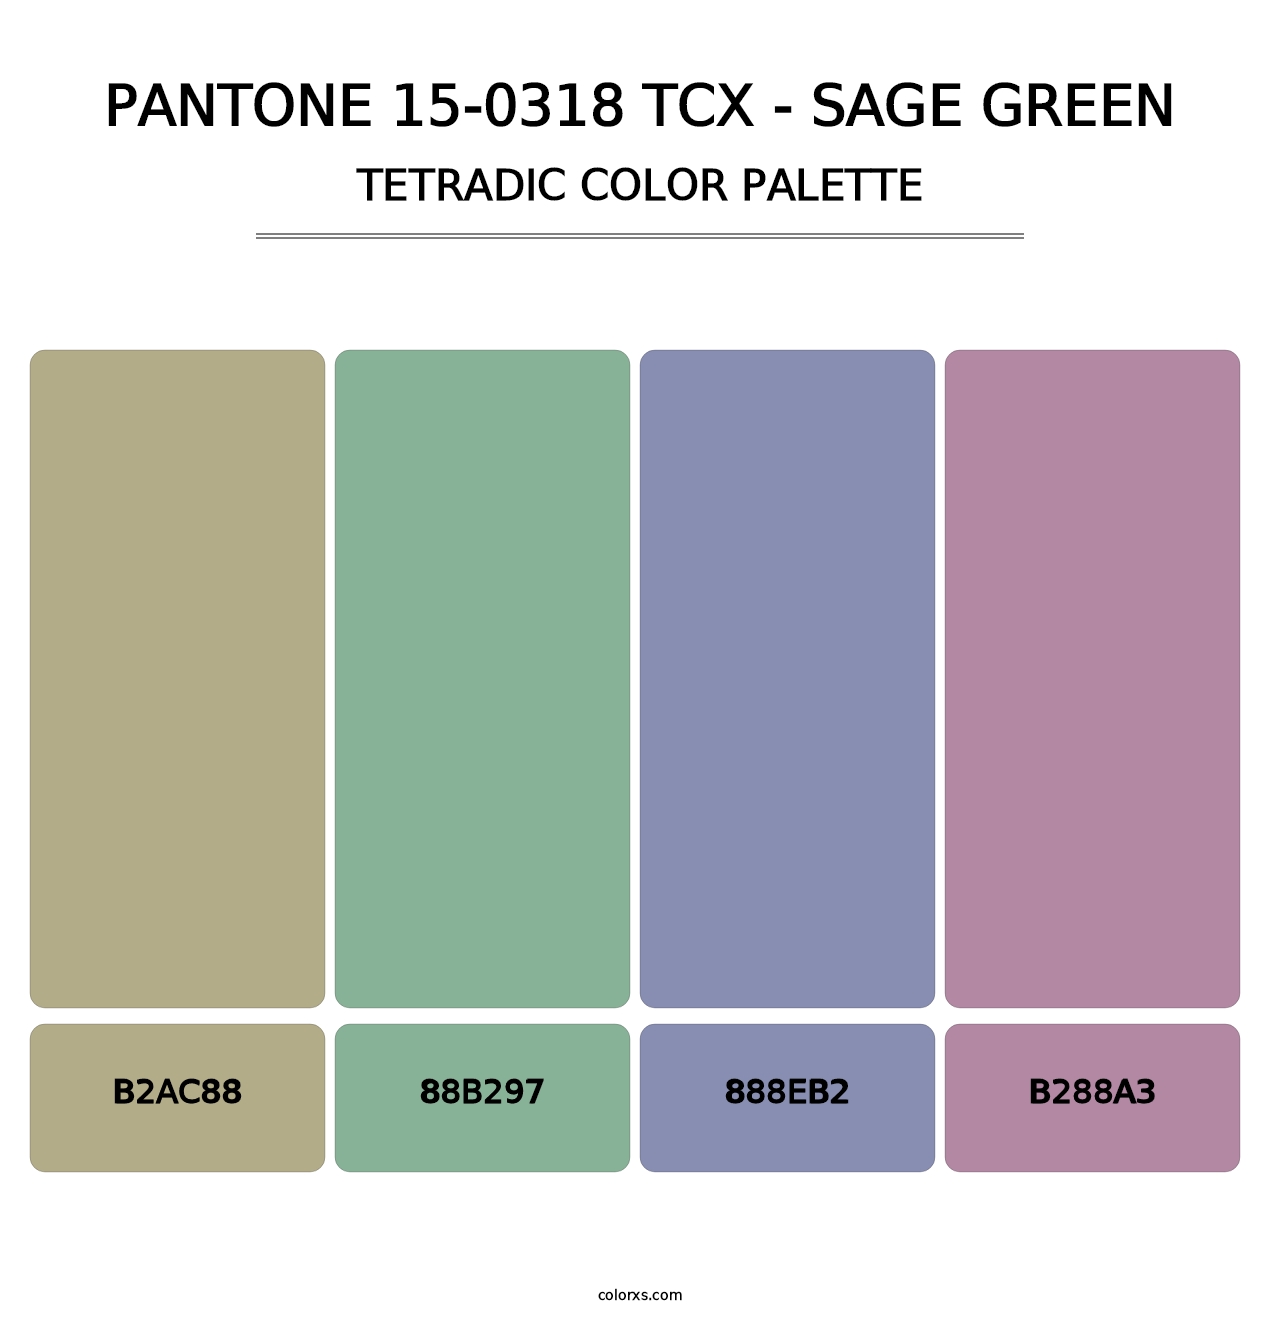 PANTONE 15-0318 TCX - Sage Green - Tetradic Color Palette